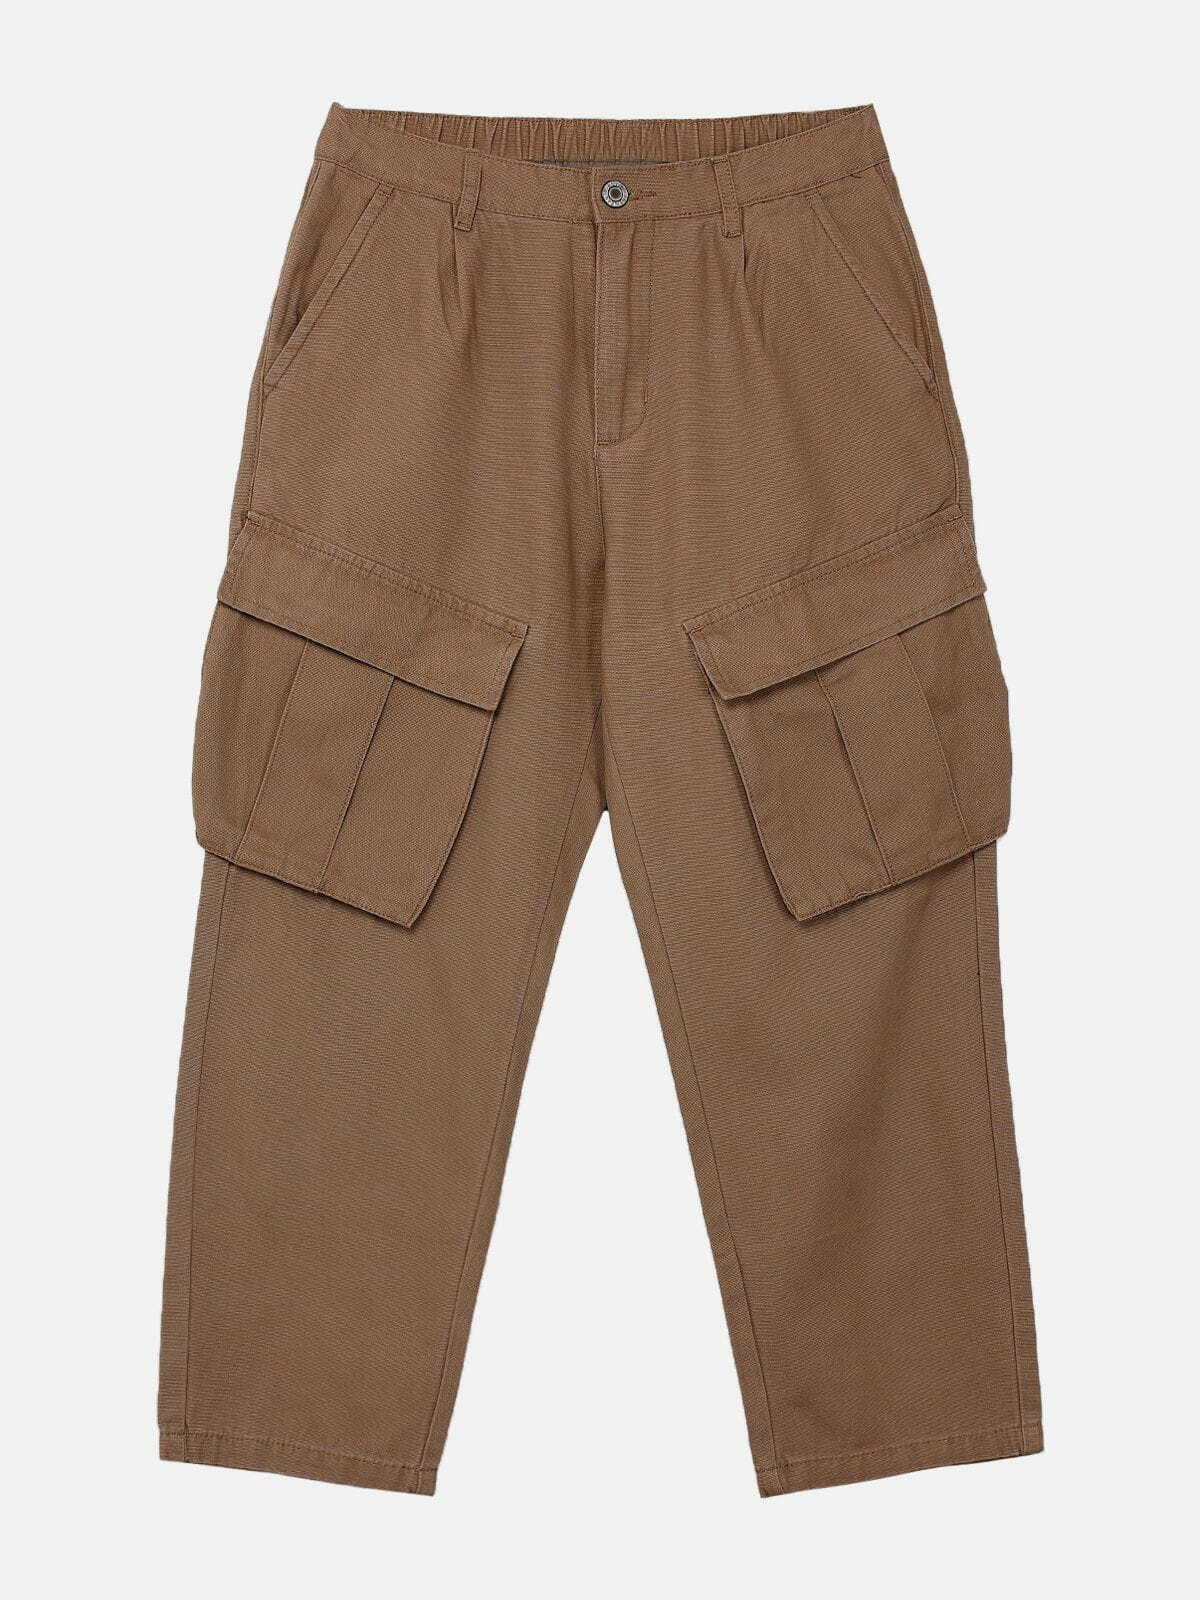 large cargo pocket pants edgy & functional streetwear 5188